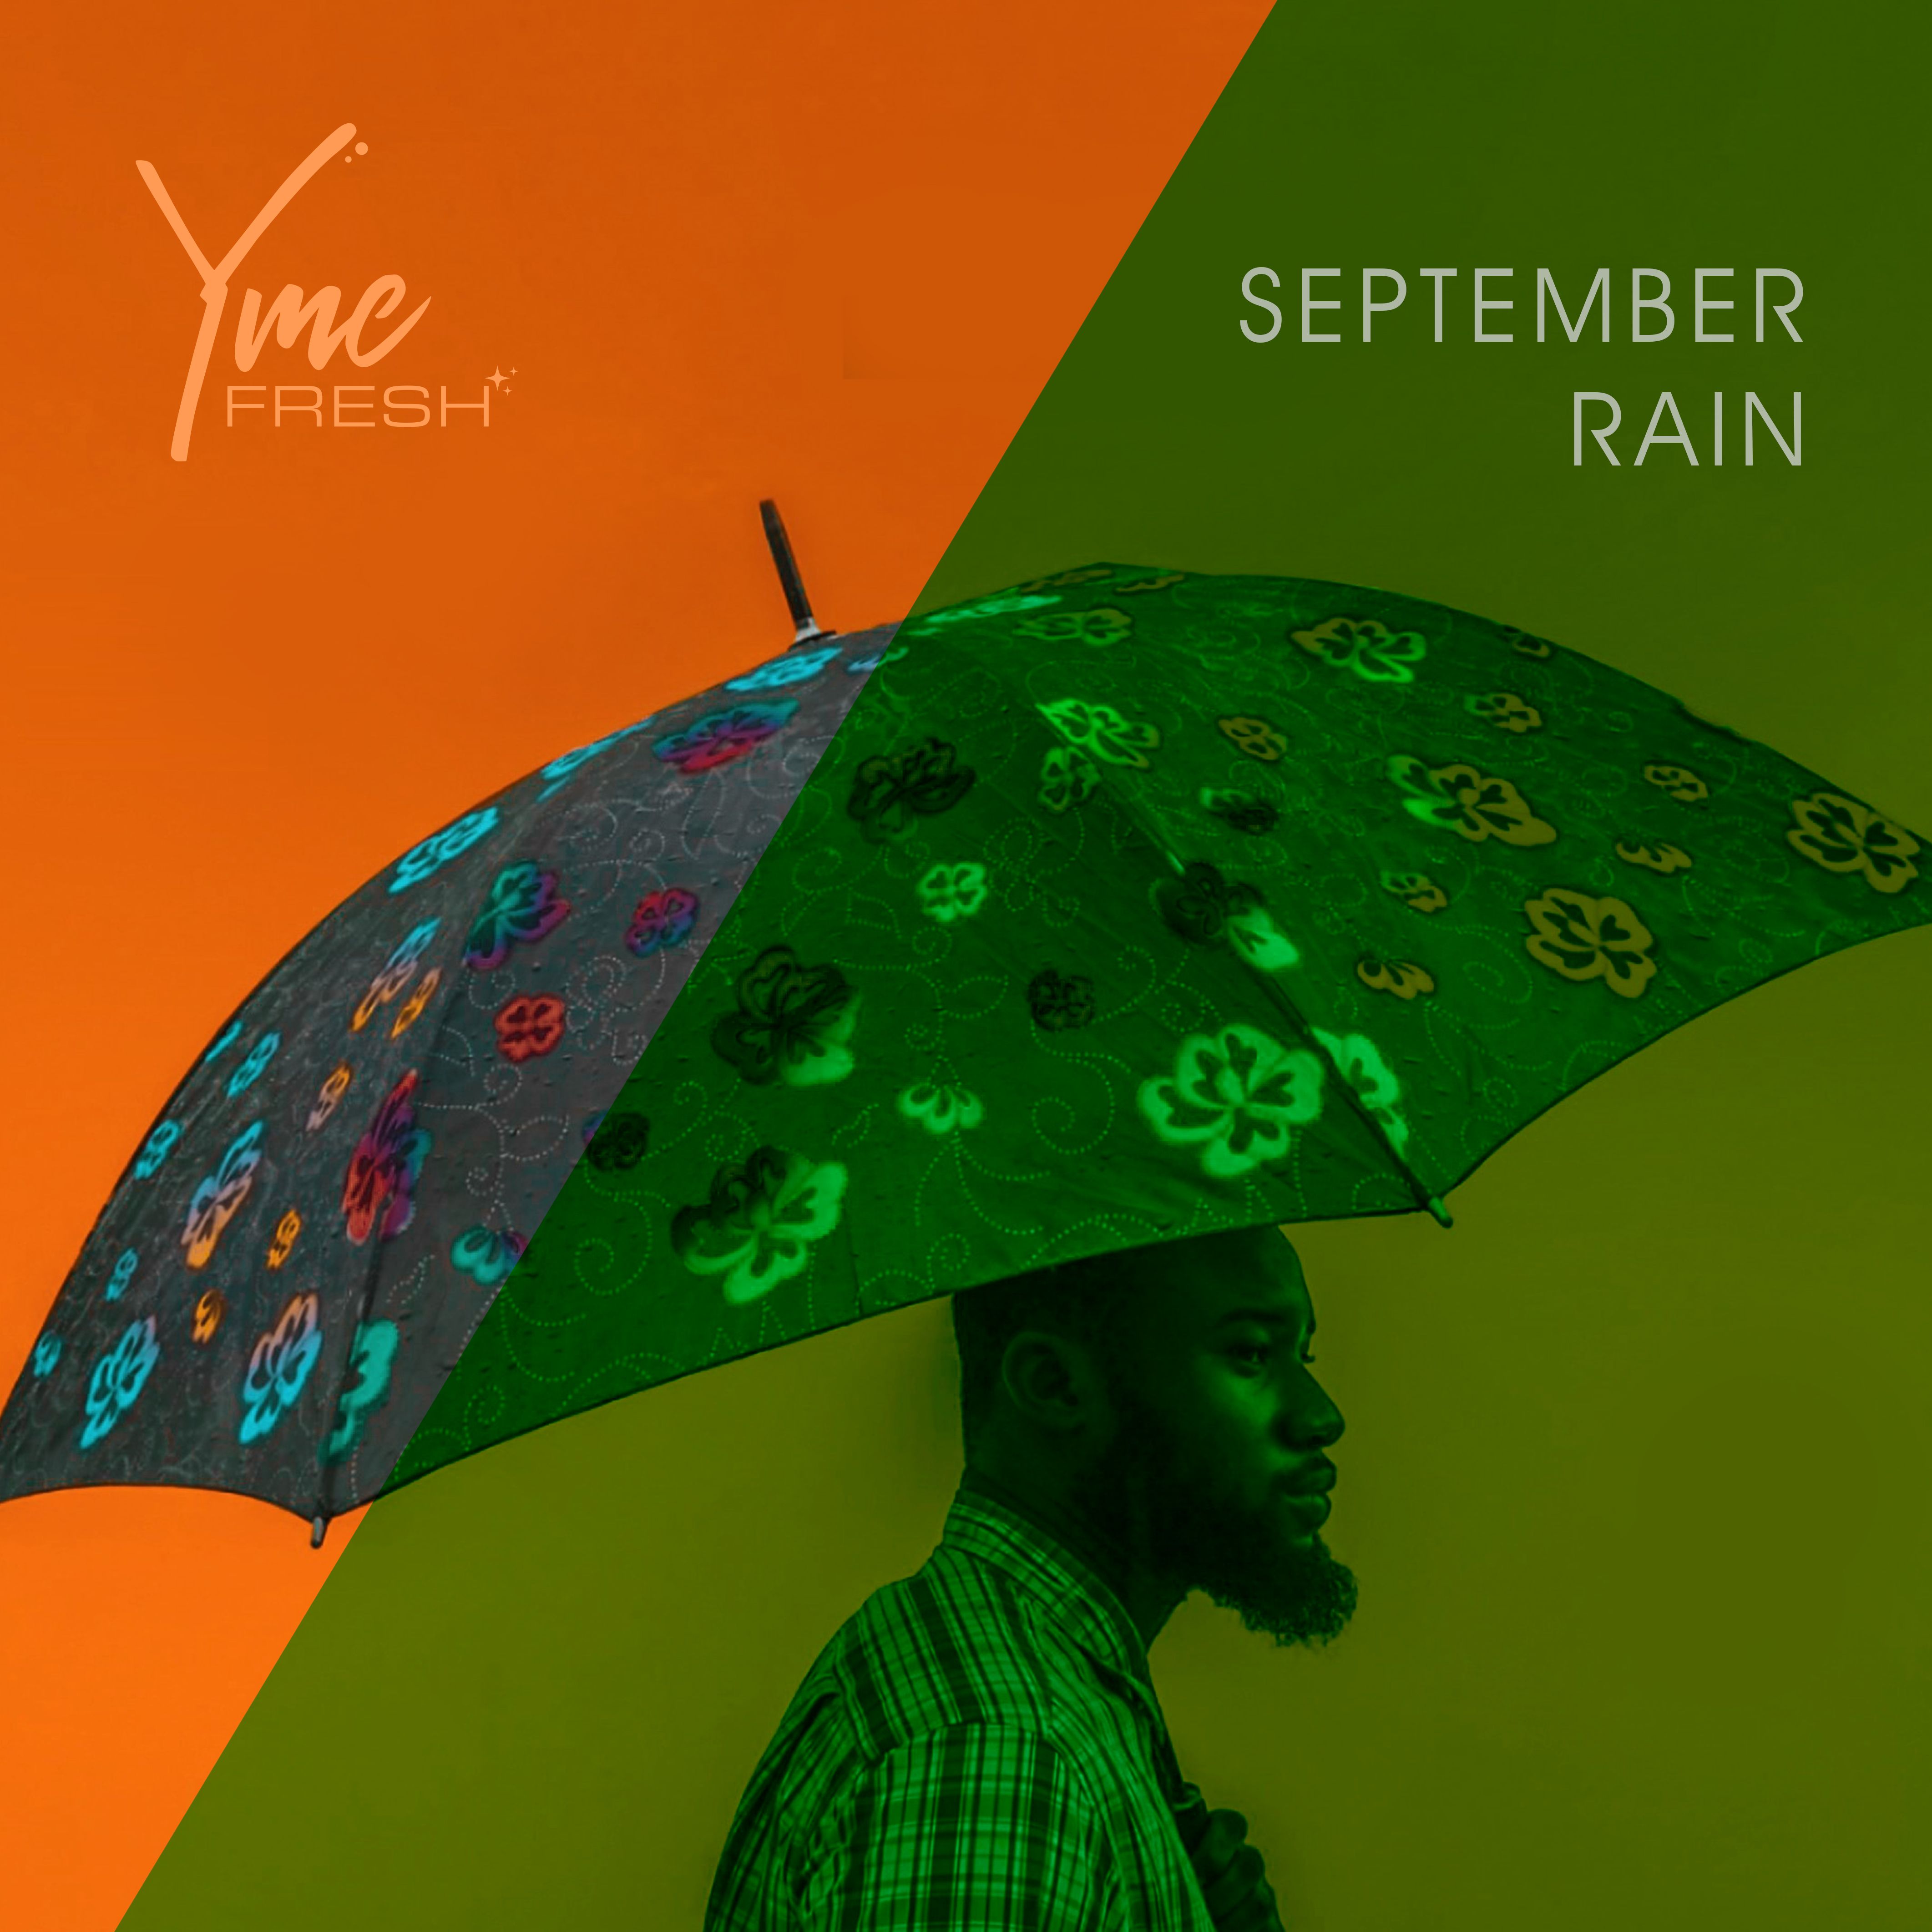 Pobierać [No Copyright Music] "September Rain" Chill Lofi Hip Hop (Copyright Free) Chillhop for Youtube